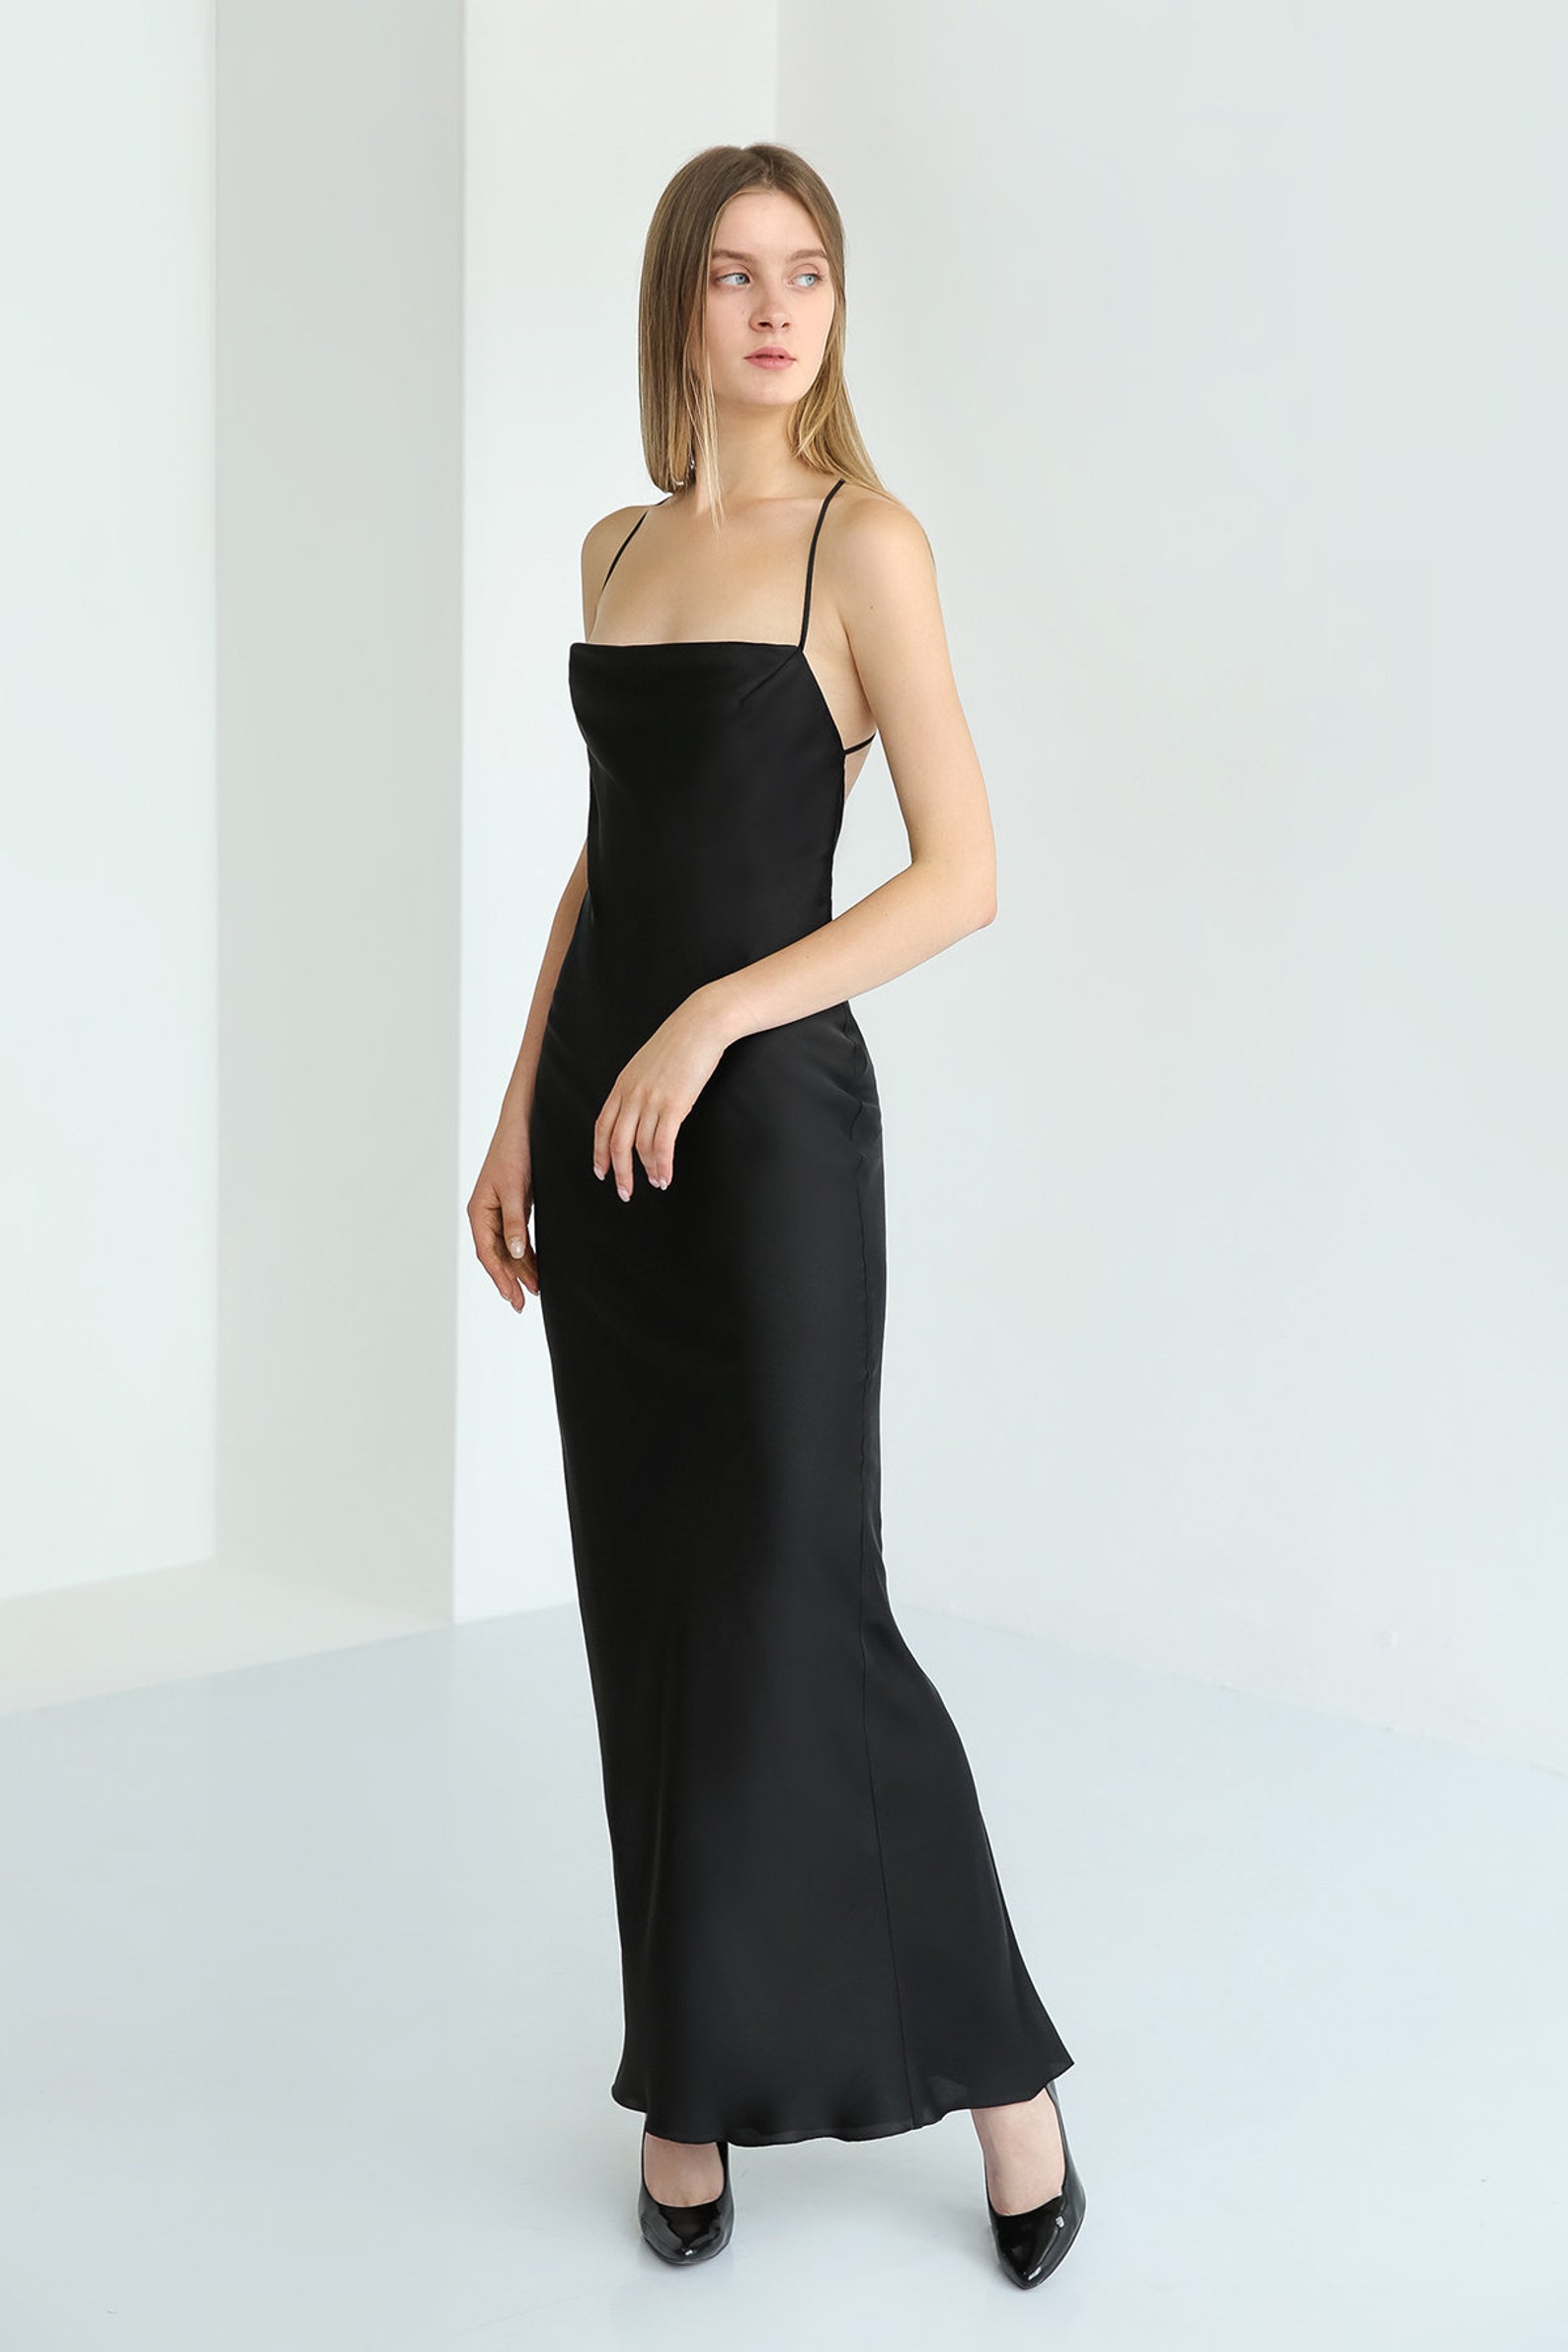 Reception dress SASHA. Sheath silhouette straight neckline | Etsy